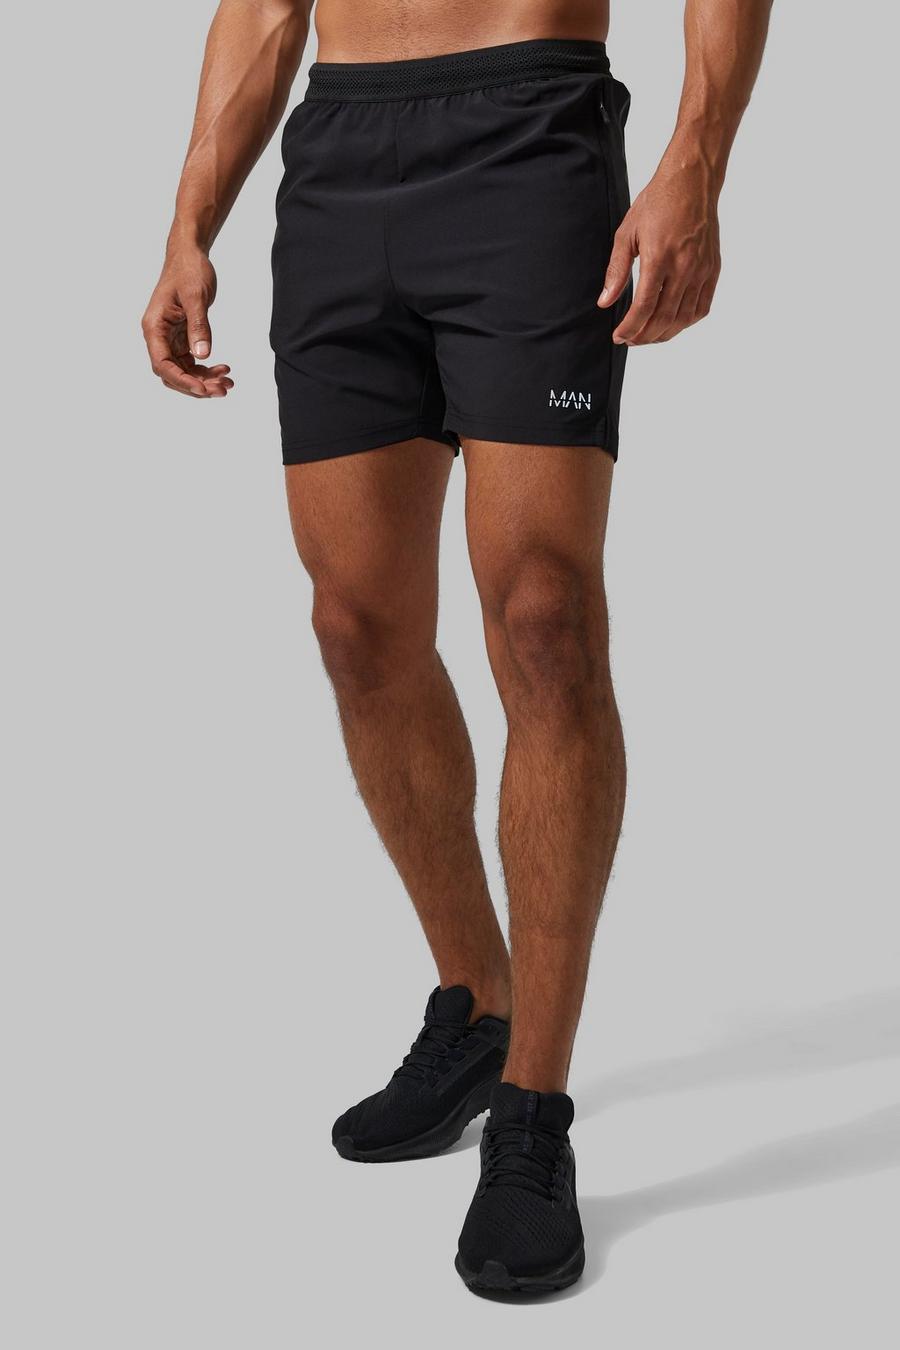 Man Active Performance-Shorts, Black image number 1